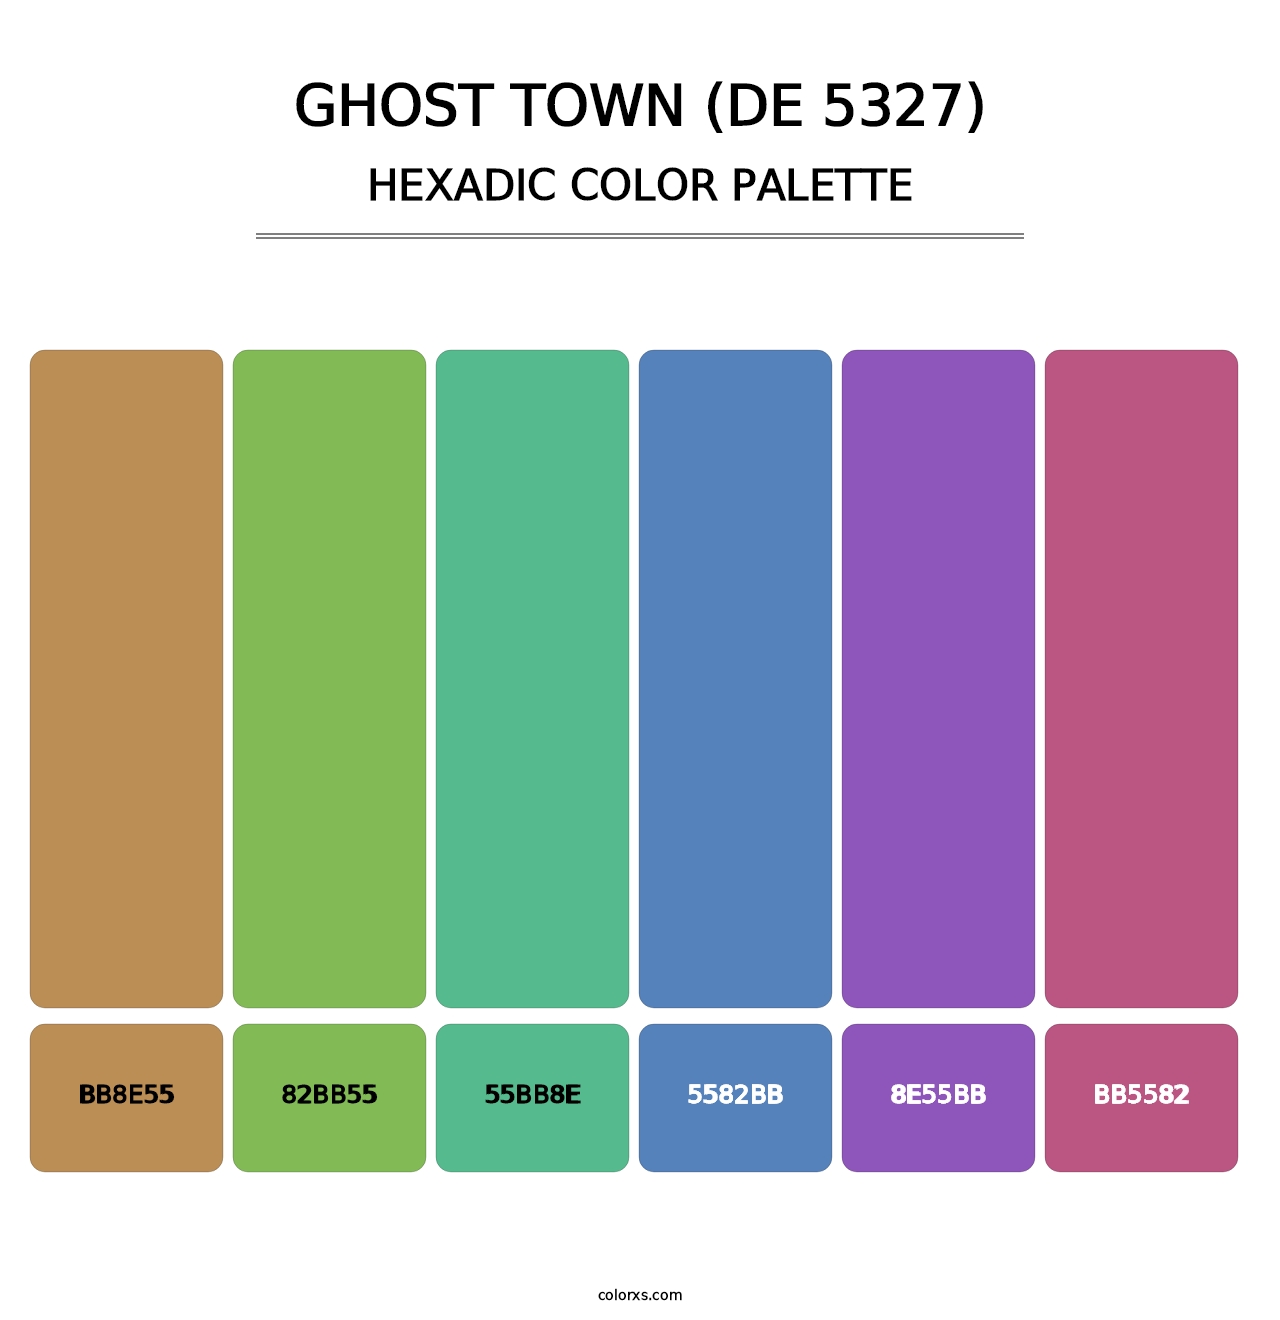 Ghost Town (DE 5327) - Hexadic Color Palette